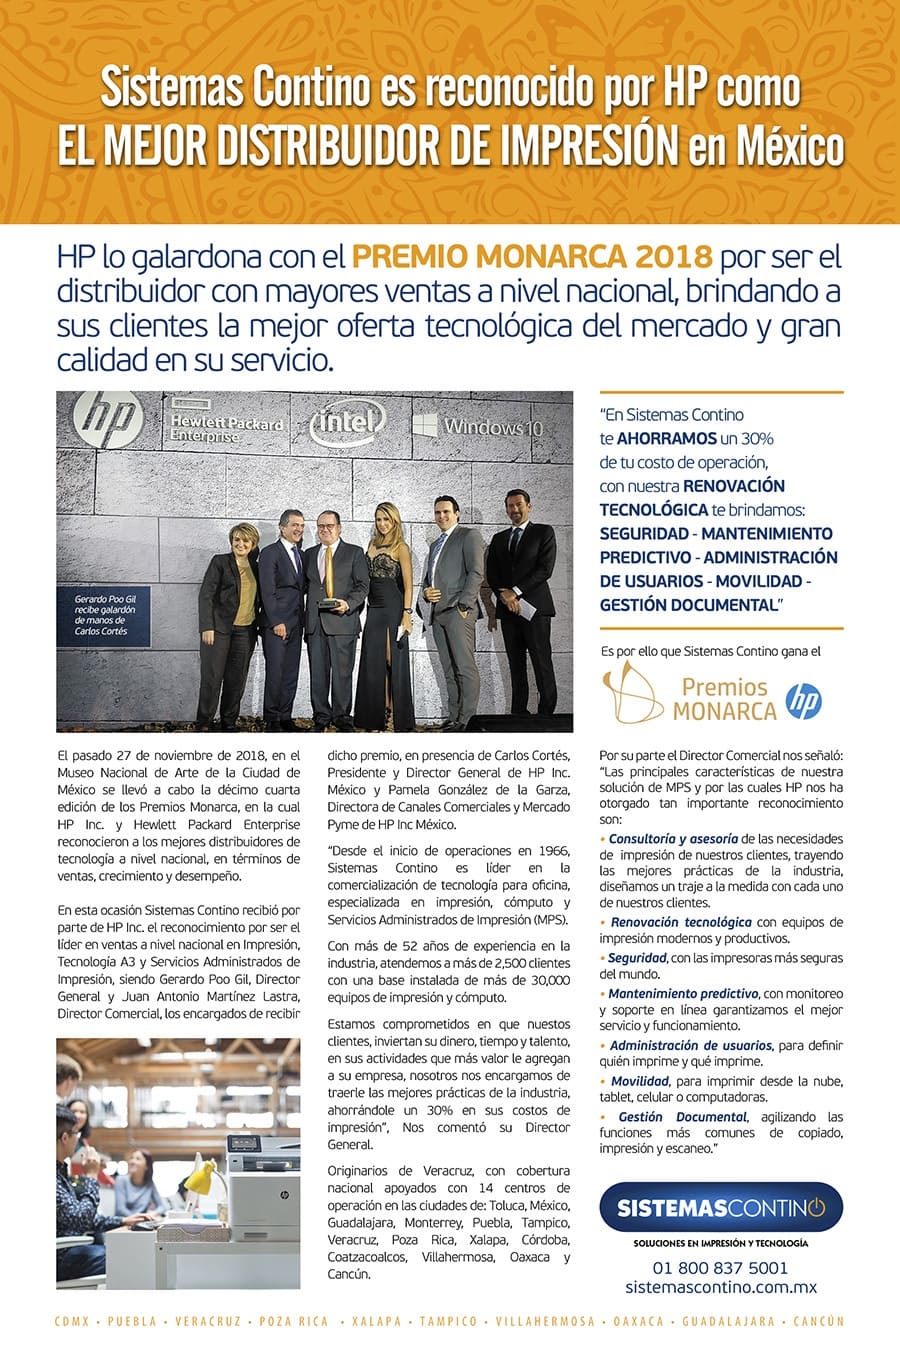 SistemasContino_Galardón Premio Monarca HP